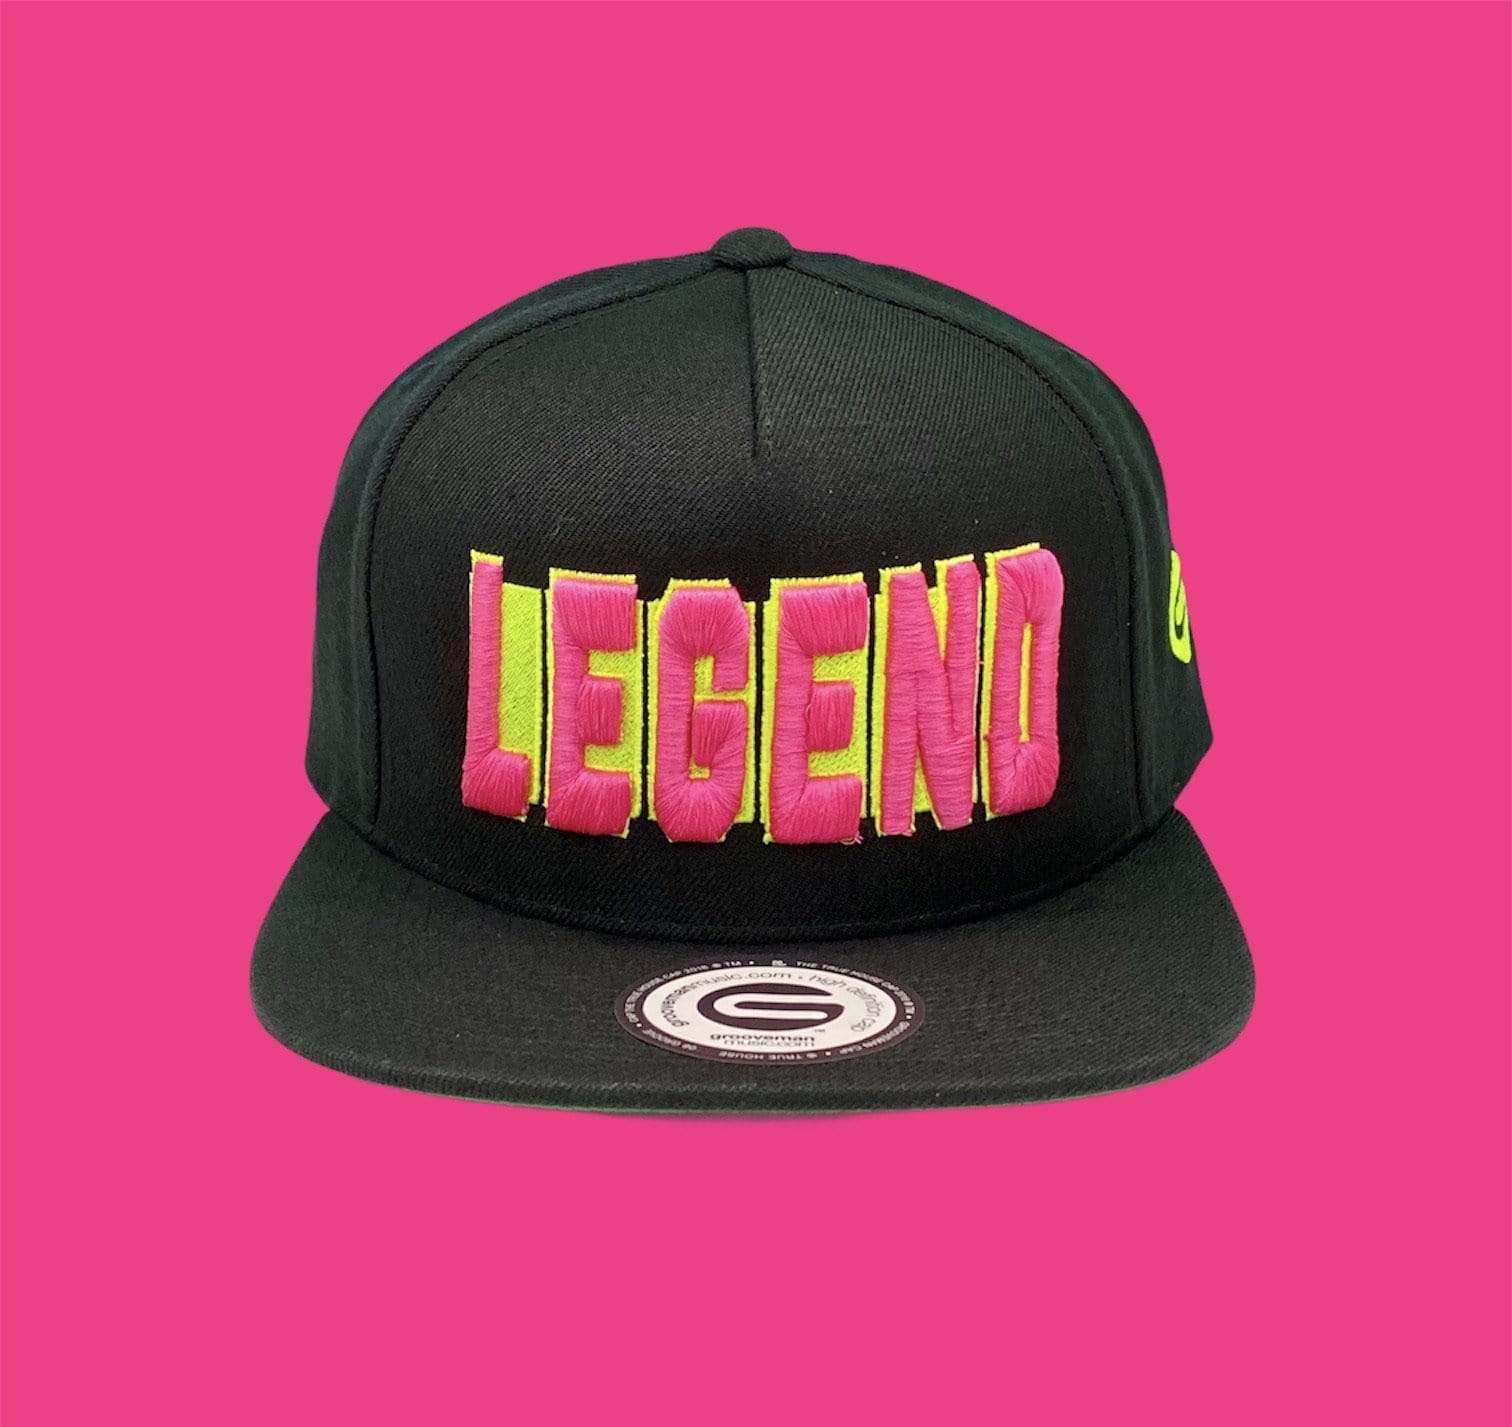 Grooveman Music Hats One Size / Black Legend Black Snapback Hat